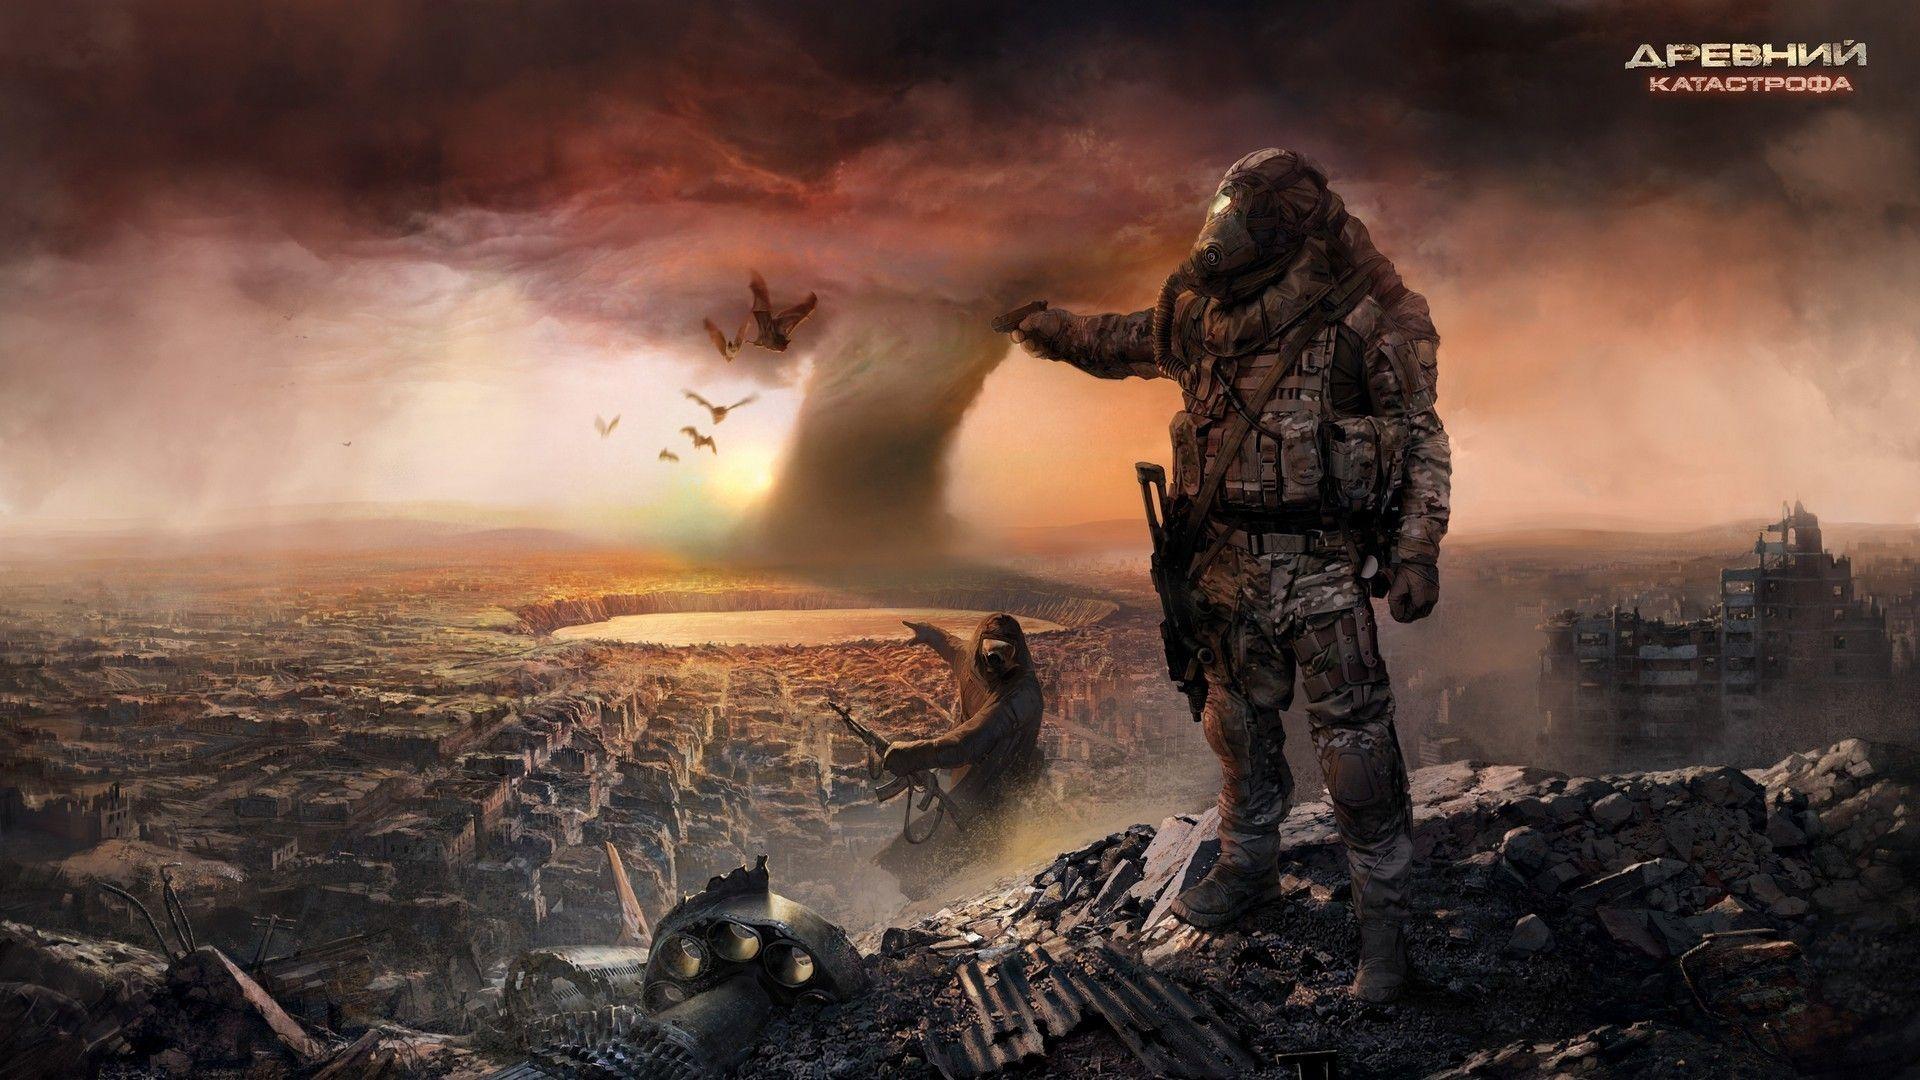 apocalypse background 11. Background Check All